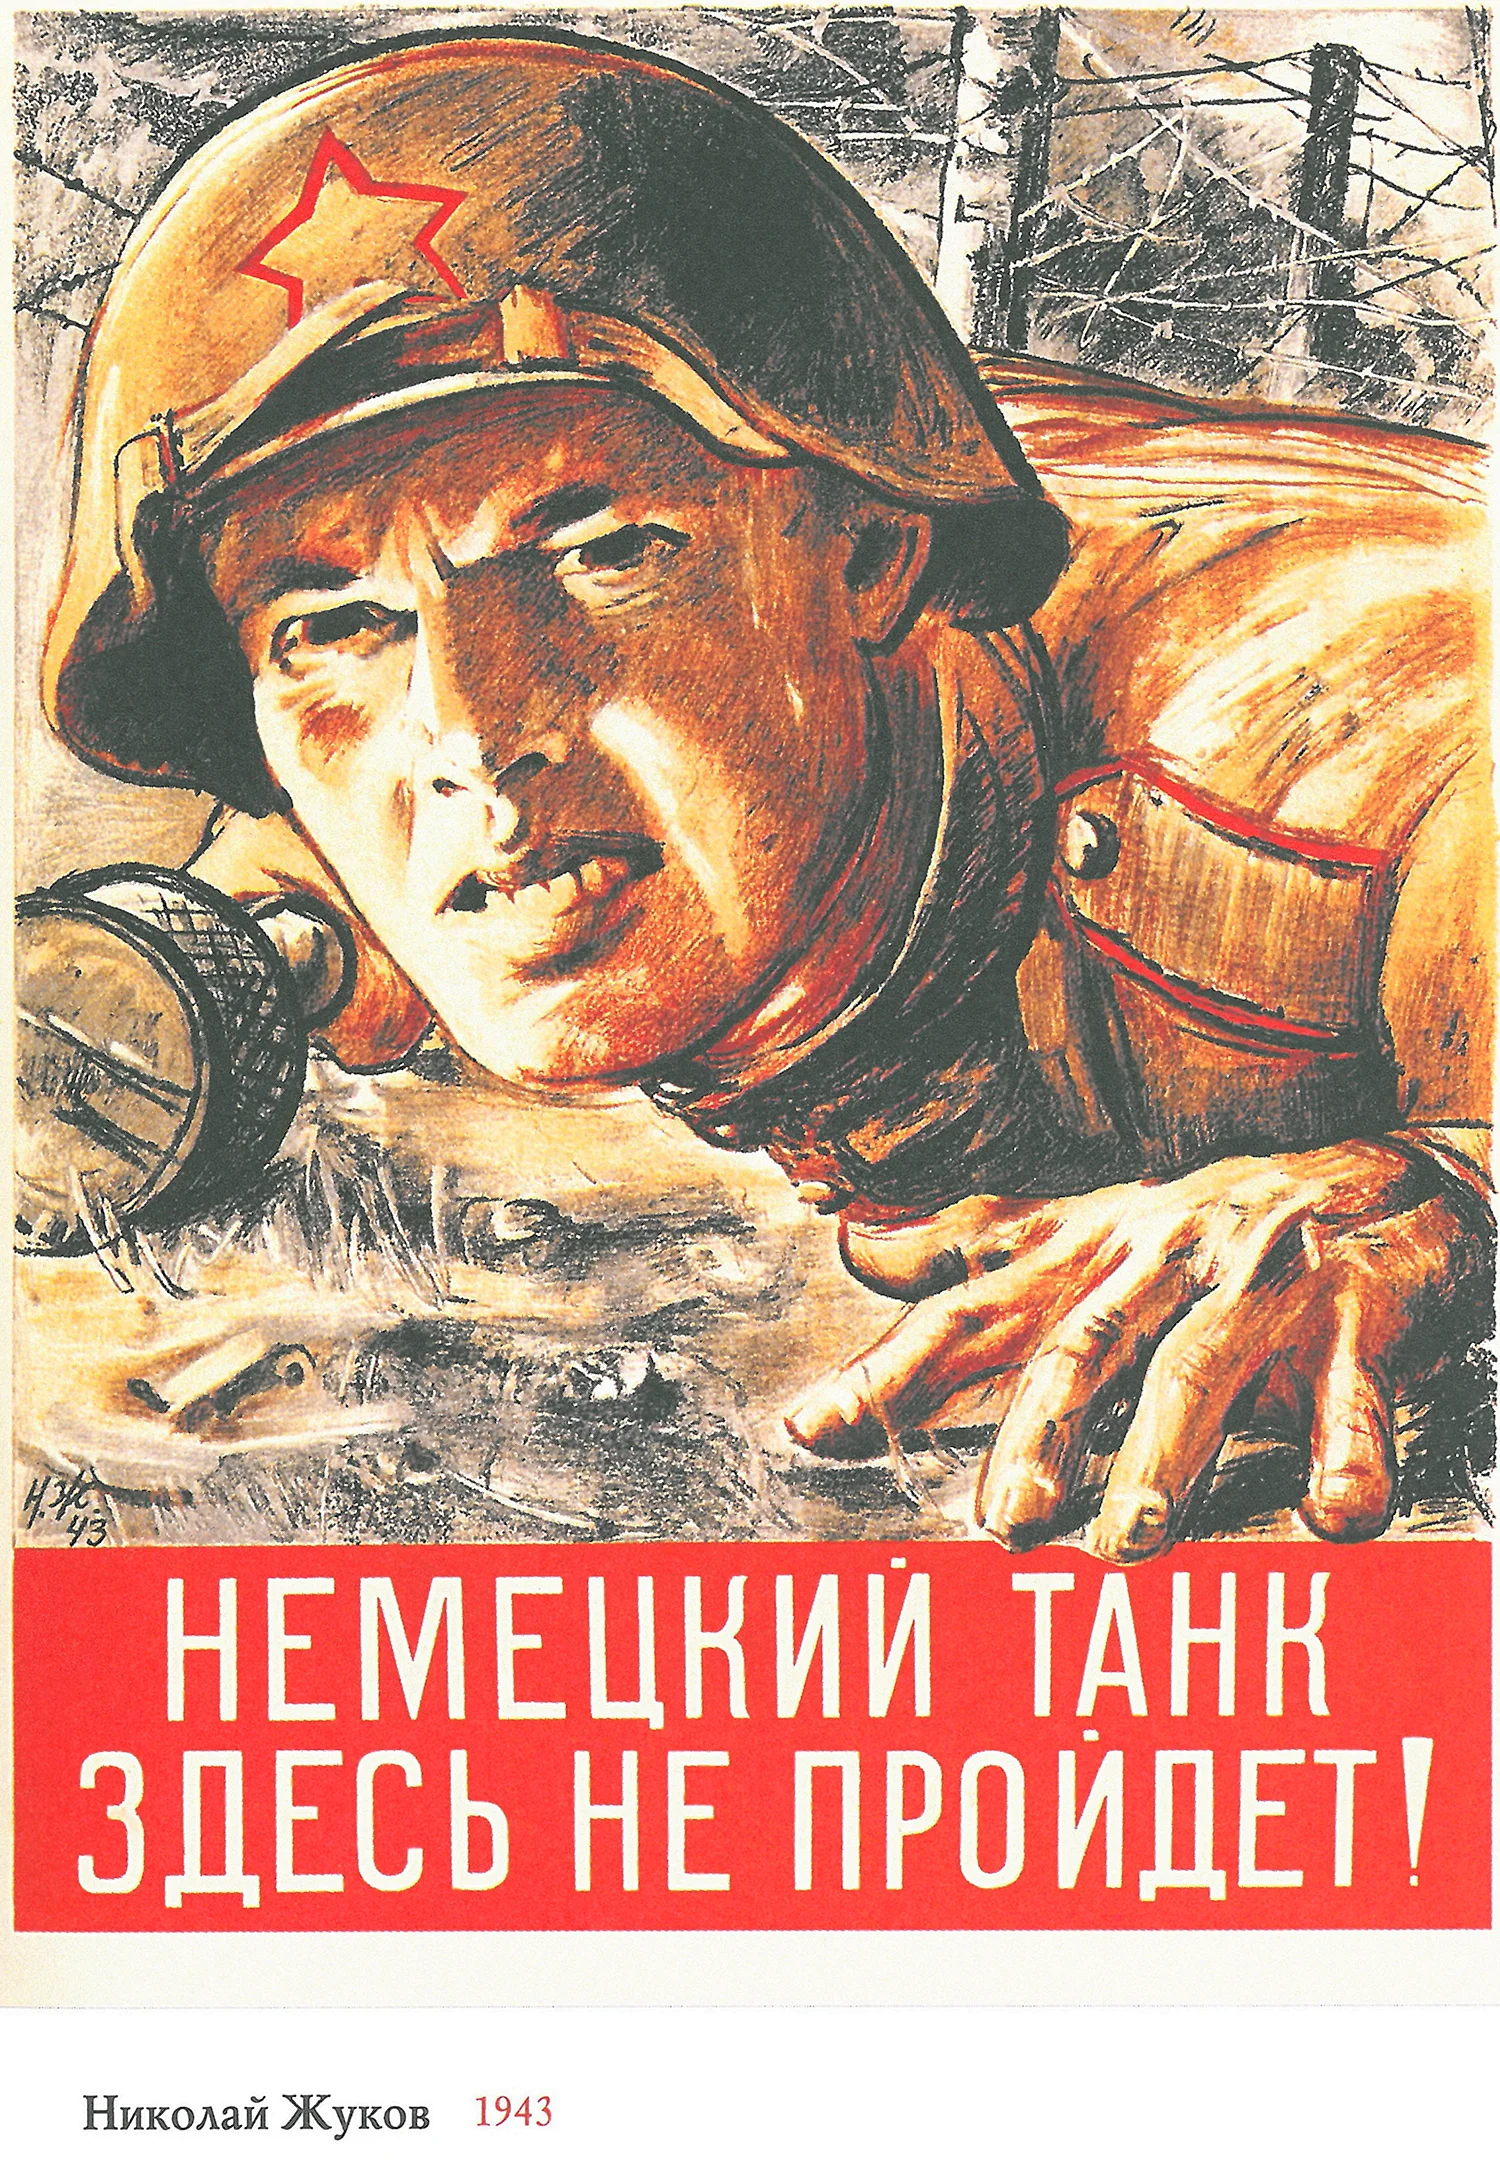 Н.Н. Жуков. Плакат 